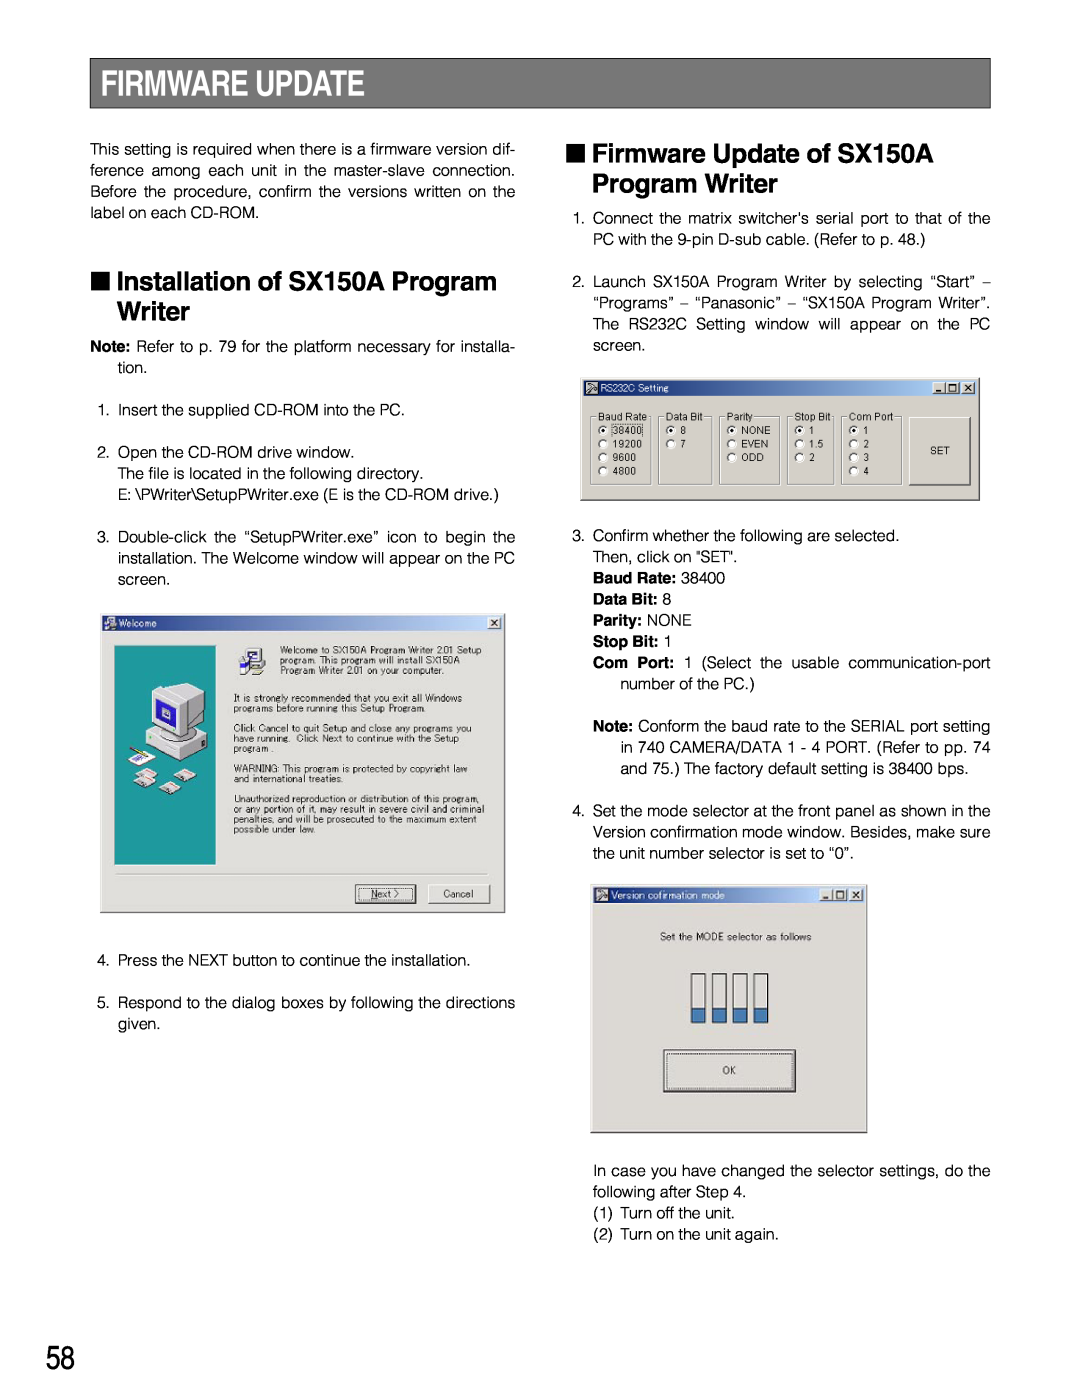 Panasonic WJ-SX150A manual Installation of SX150A Program Writer, Firmware Update of SX150A Program Writer 